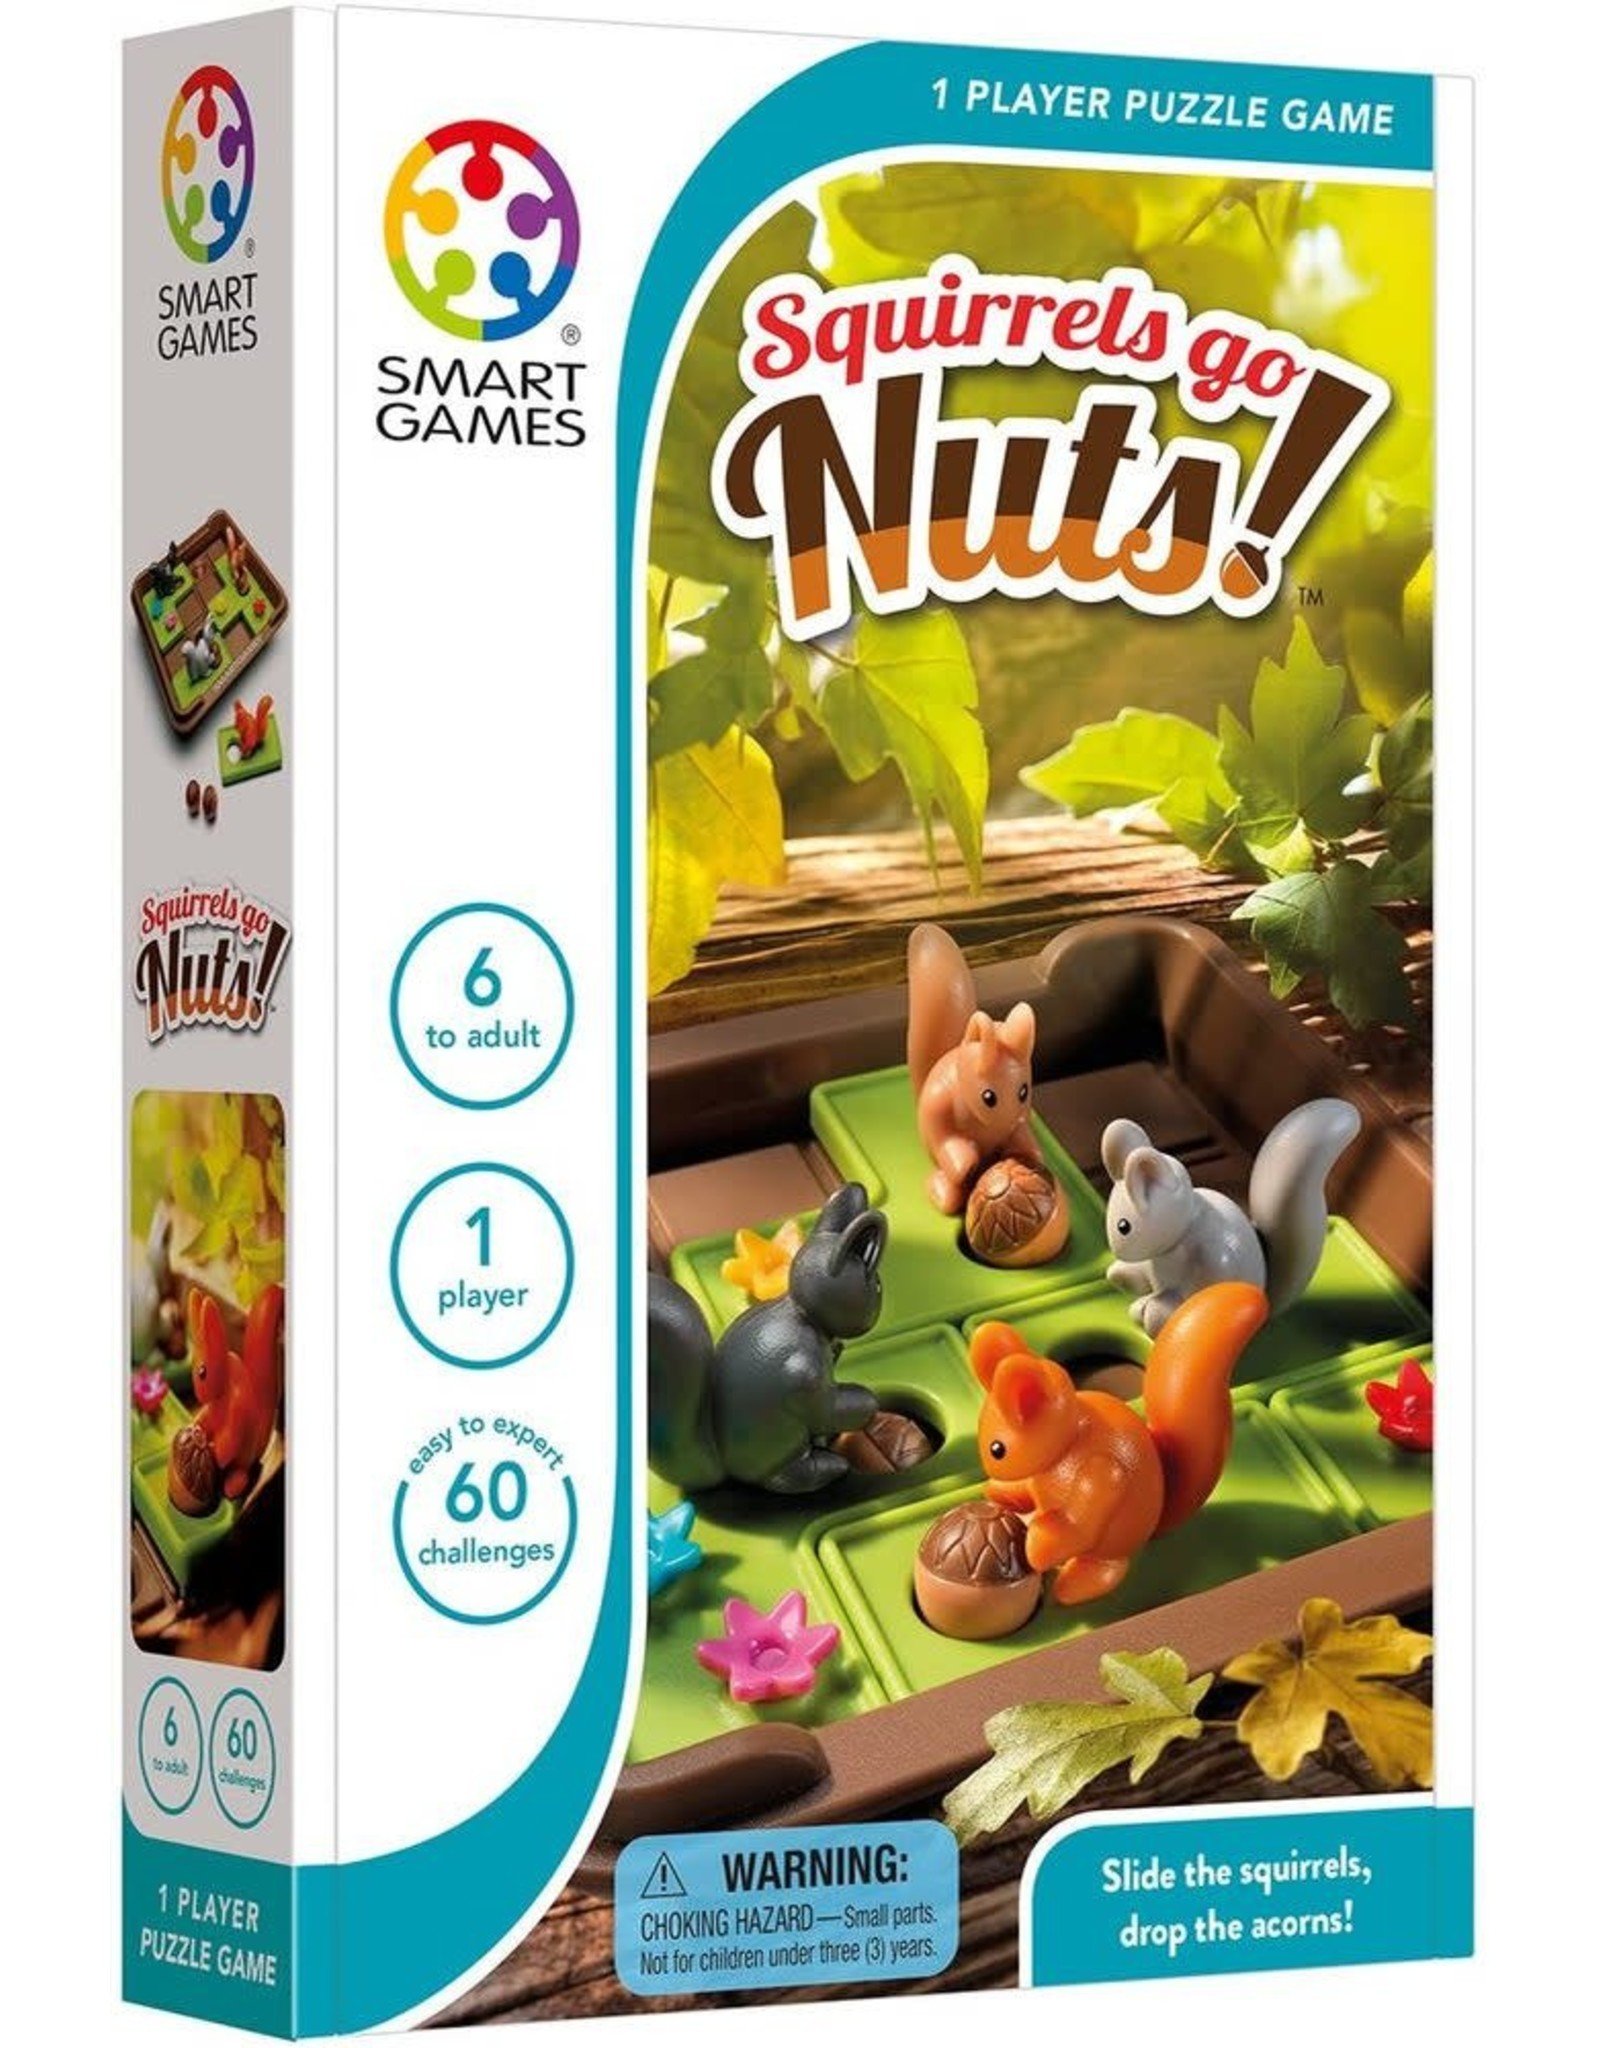 Squirrels Go Nuts!